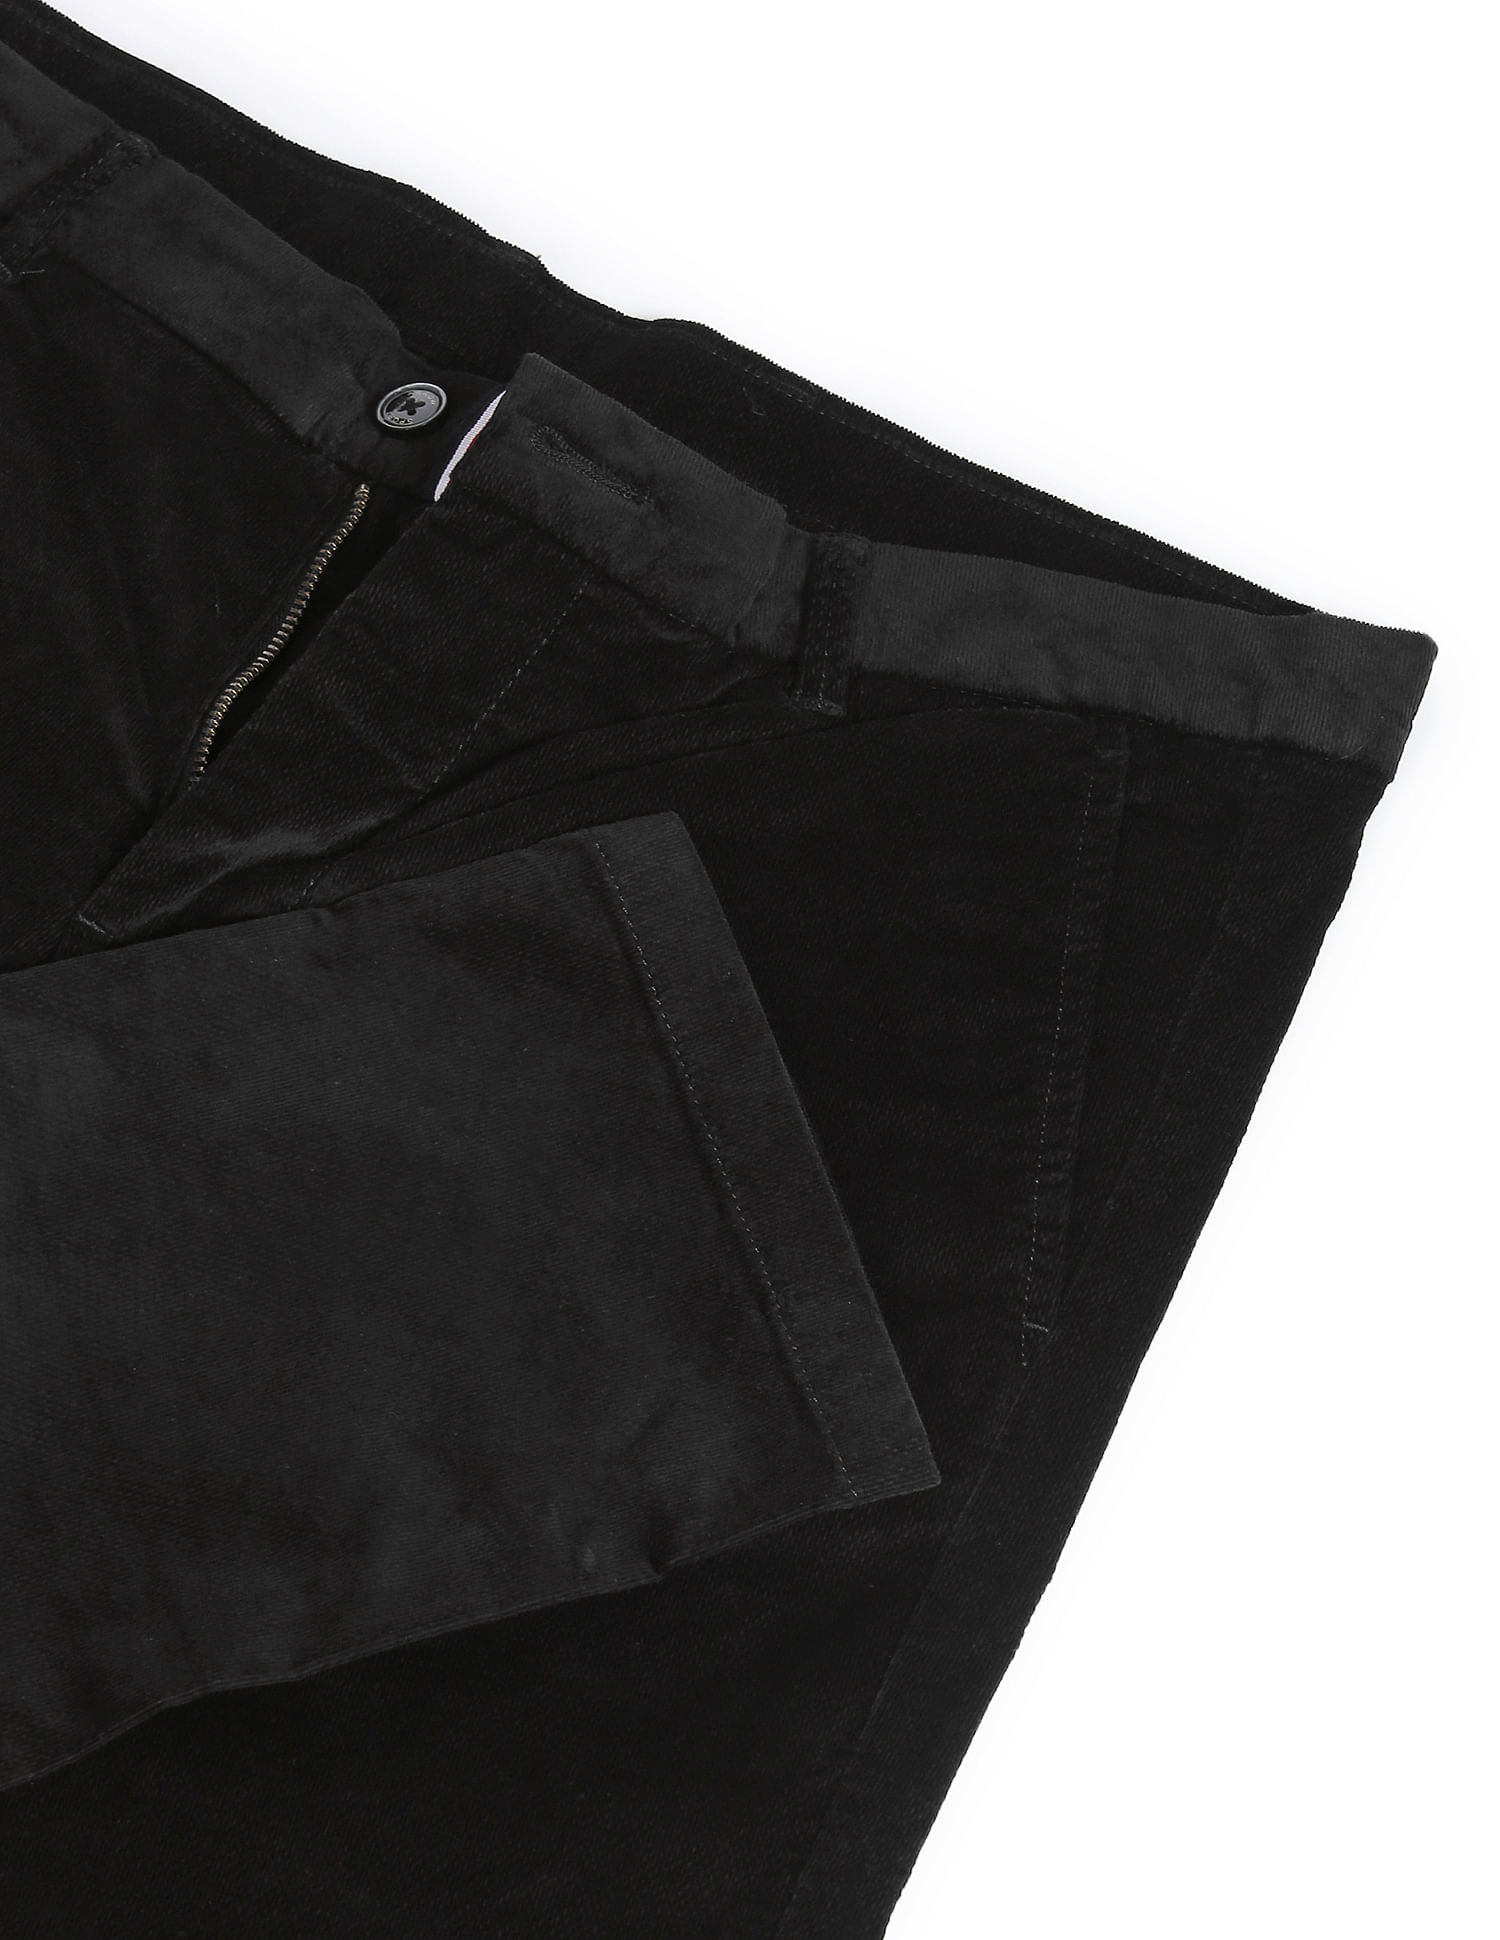 Buy Men Black Stripe Slim Fit Formal Trousers Online - 746939 | Peter  England